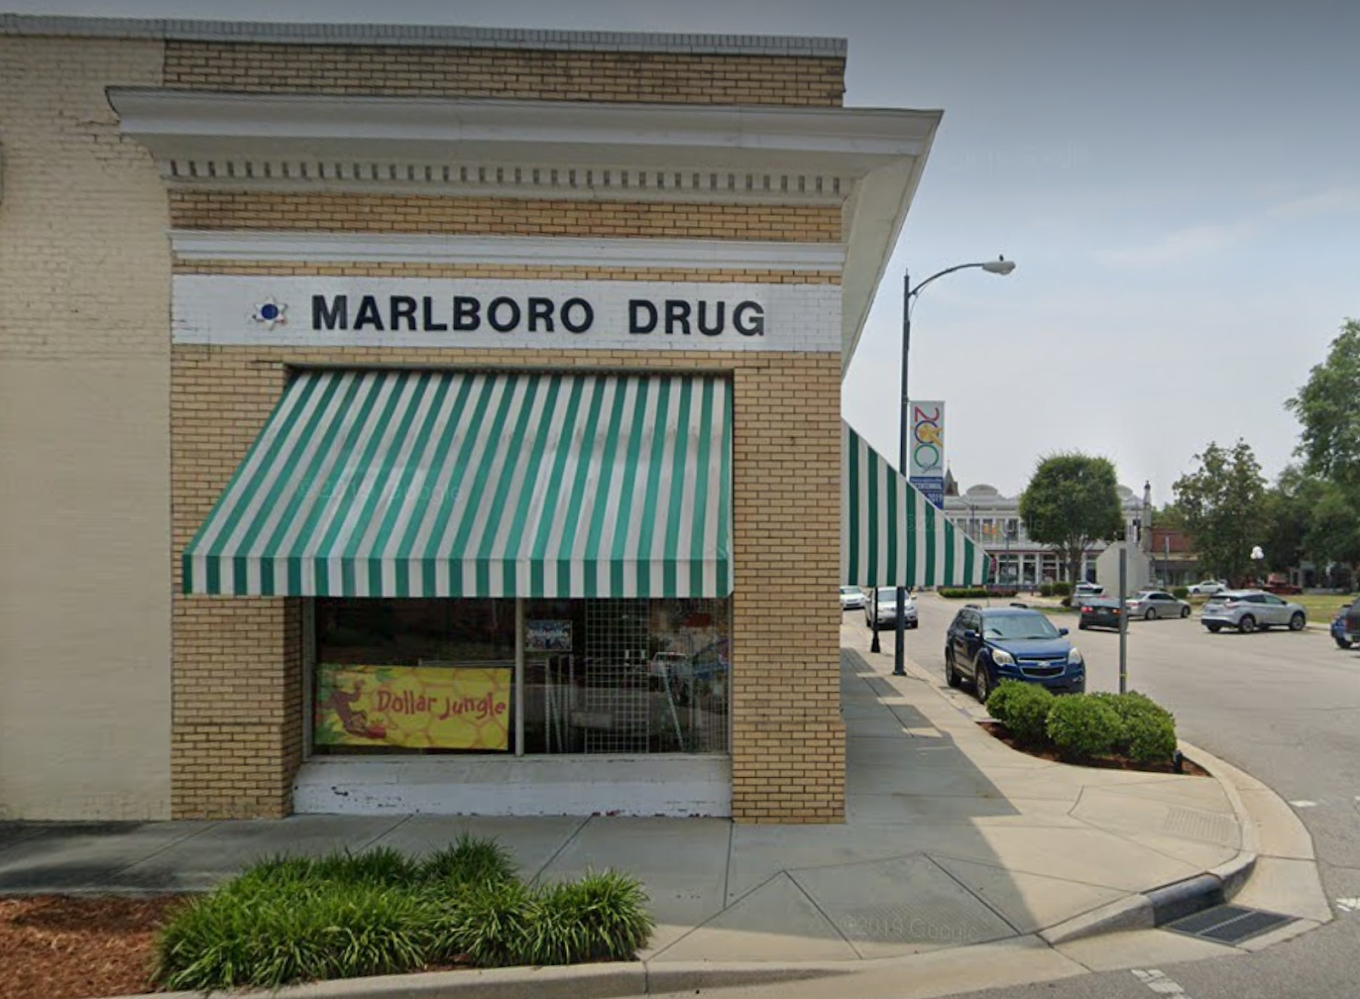 Marlboro Drug Company's building